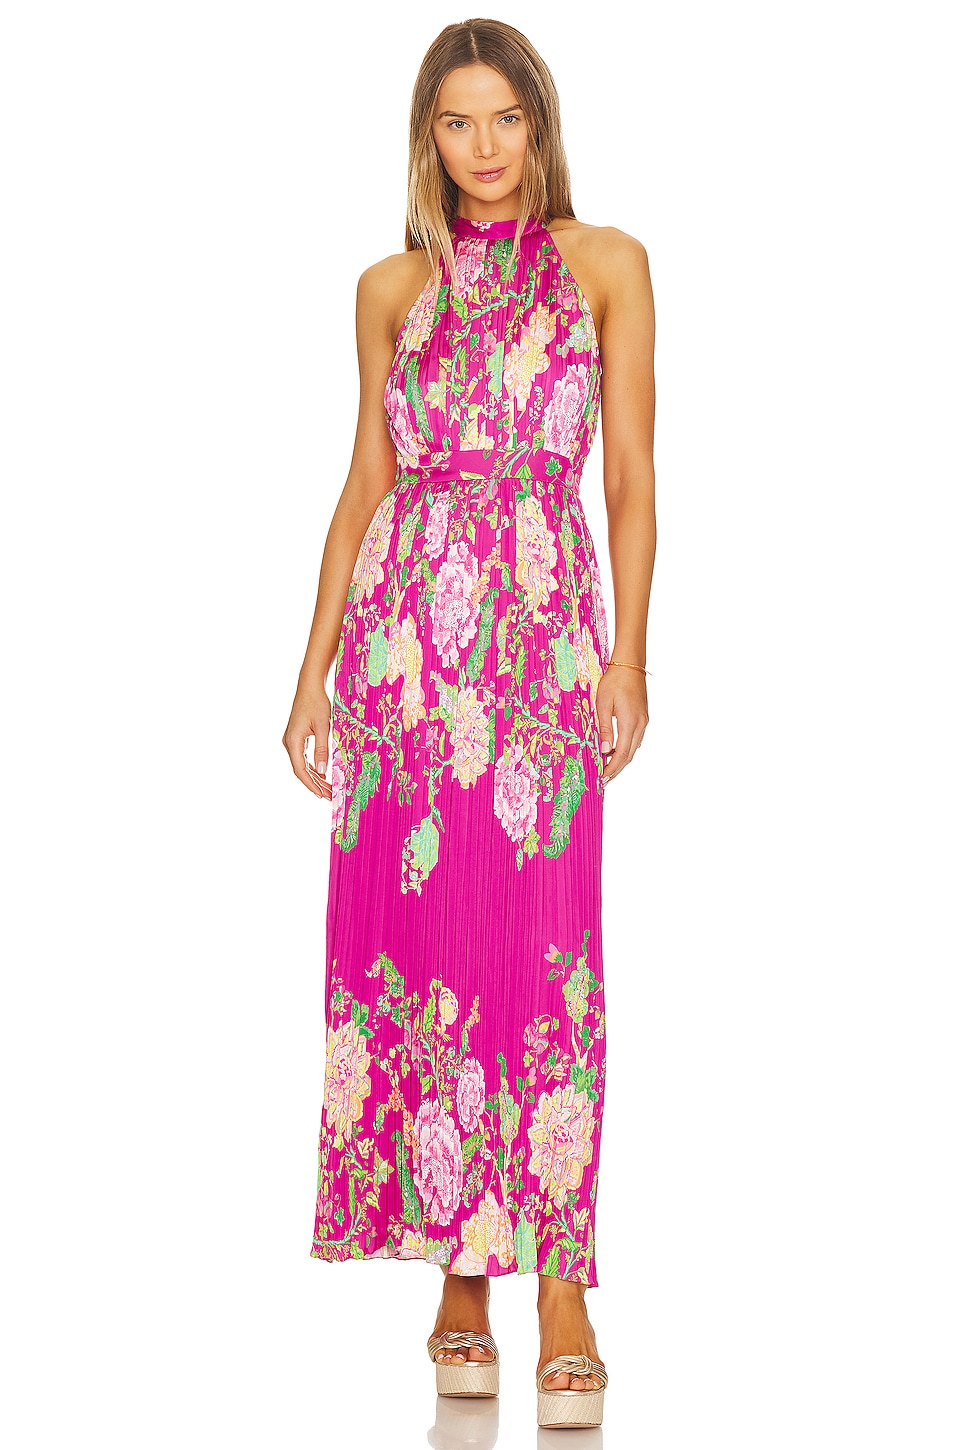 ROCOCO SAND Chloe Long Dress in Fuchsia Pink